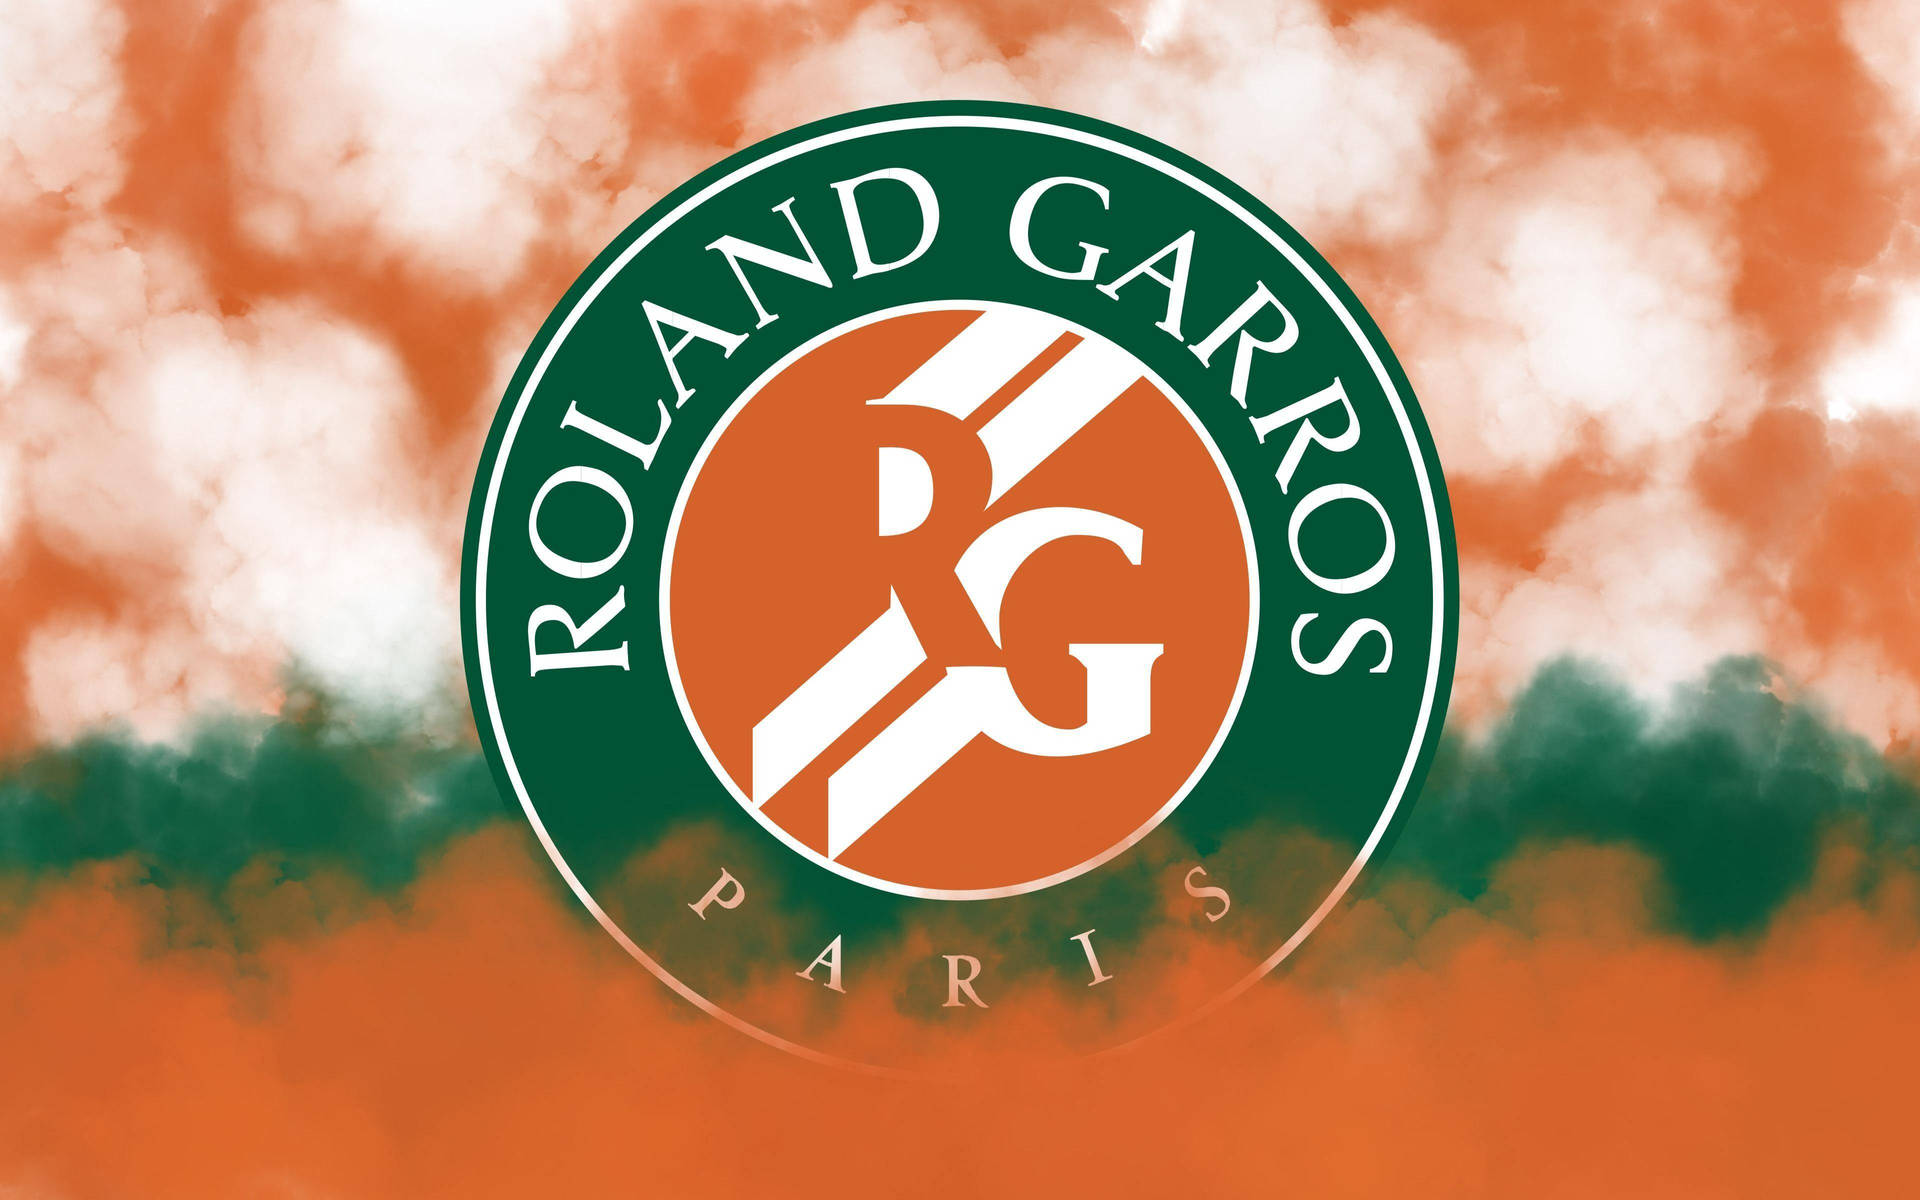 French Open Roland Garros Digital Logo Background